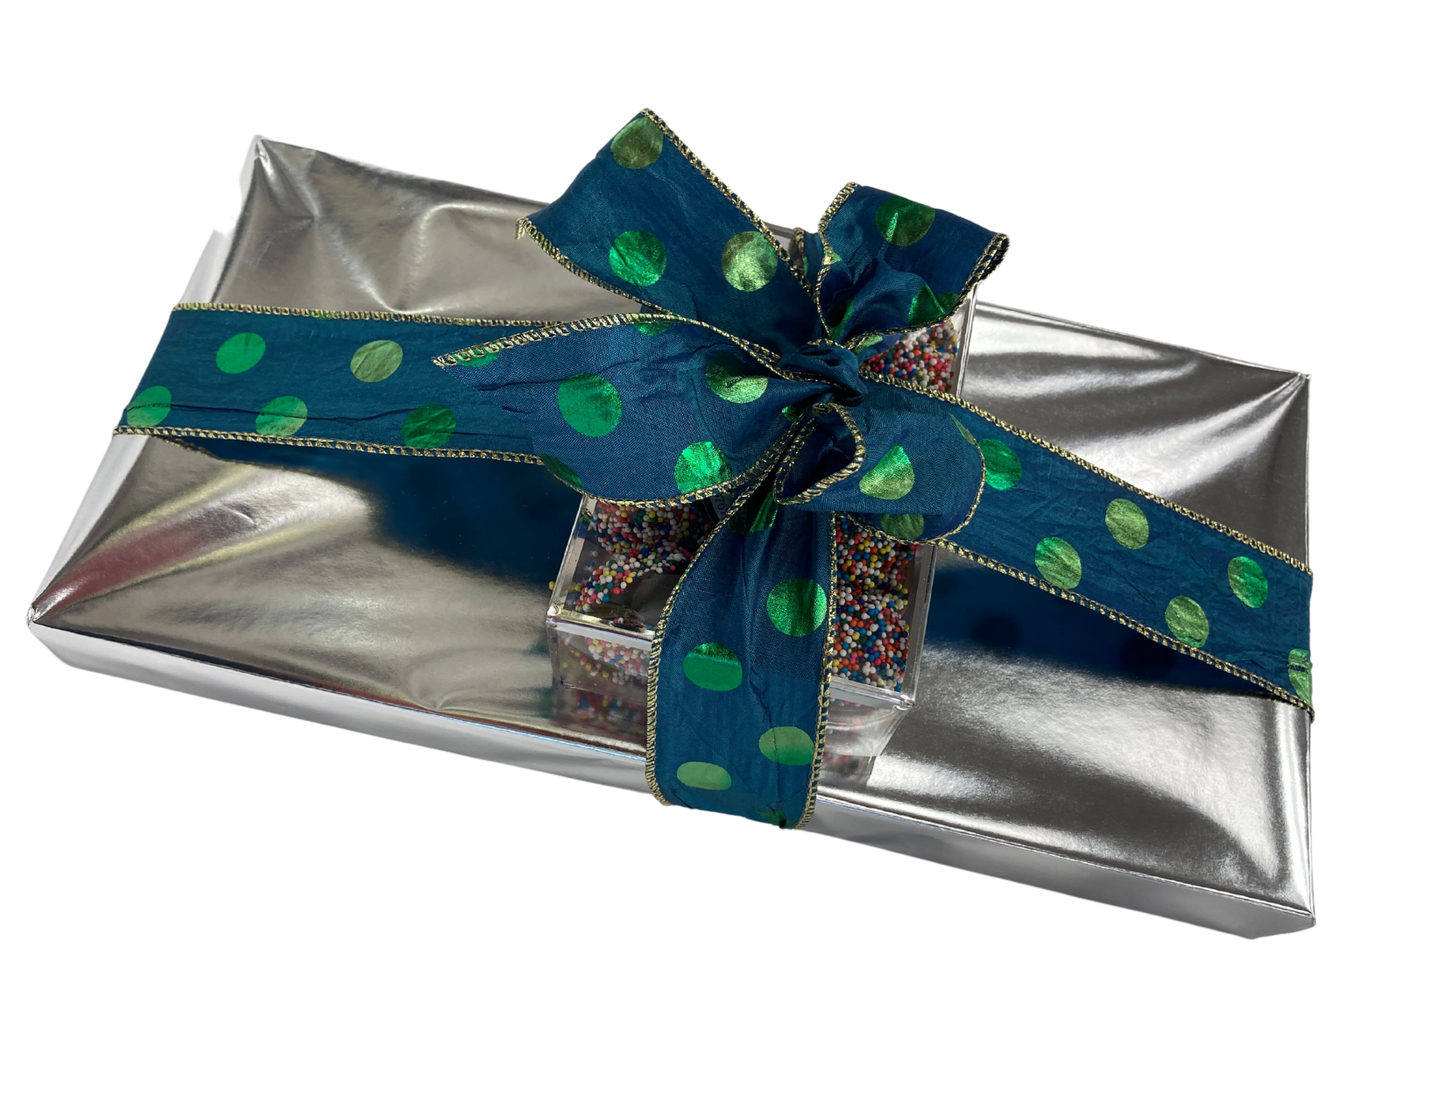 2 Tier Medium Assorted Gift Box w/ Non-Pareil box